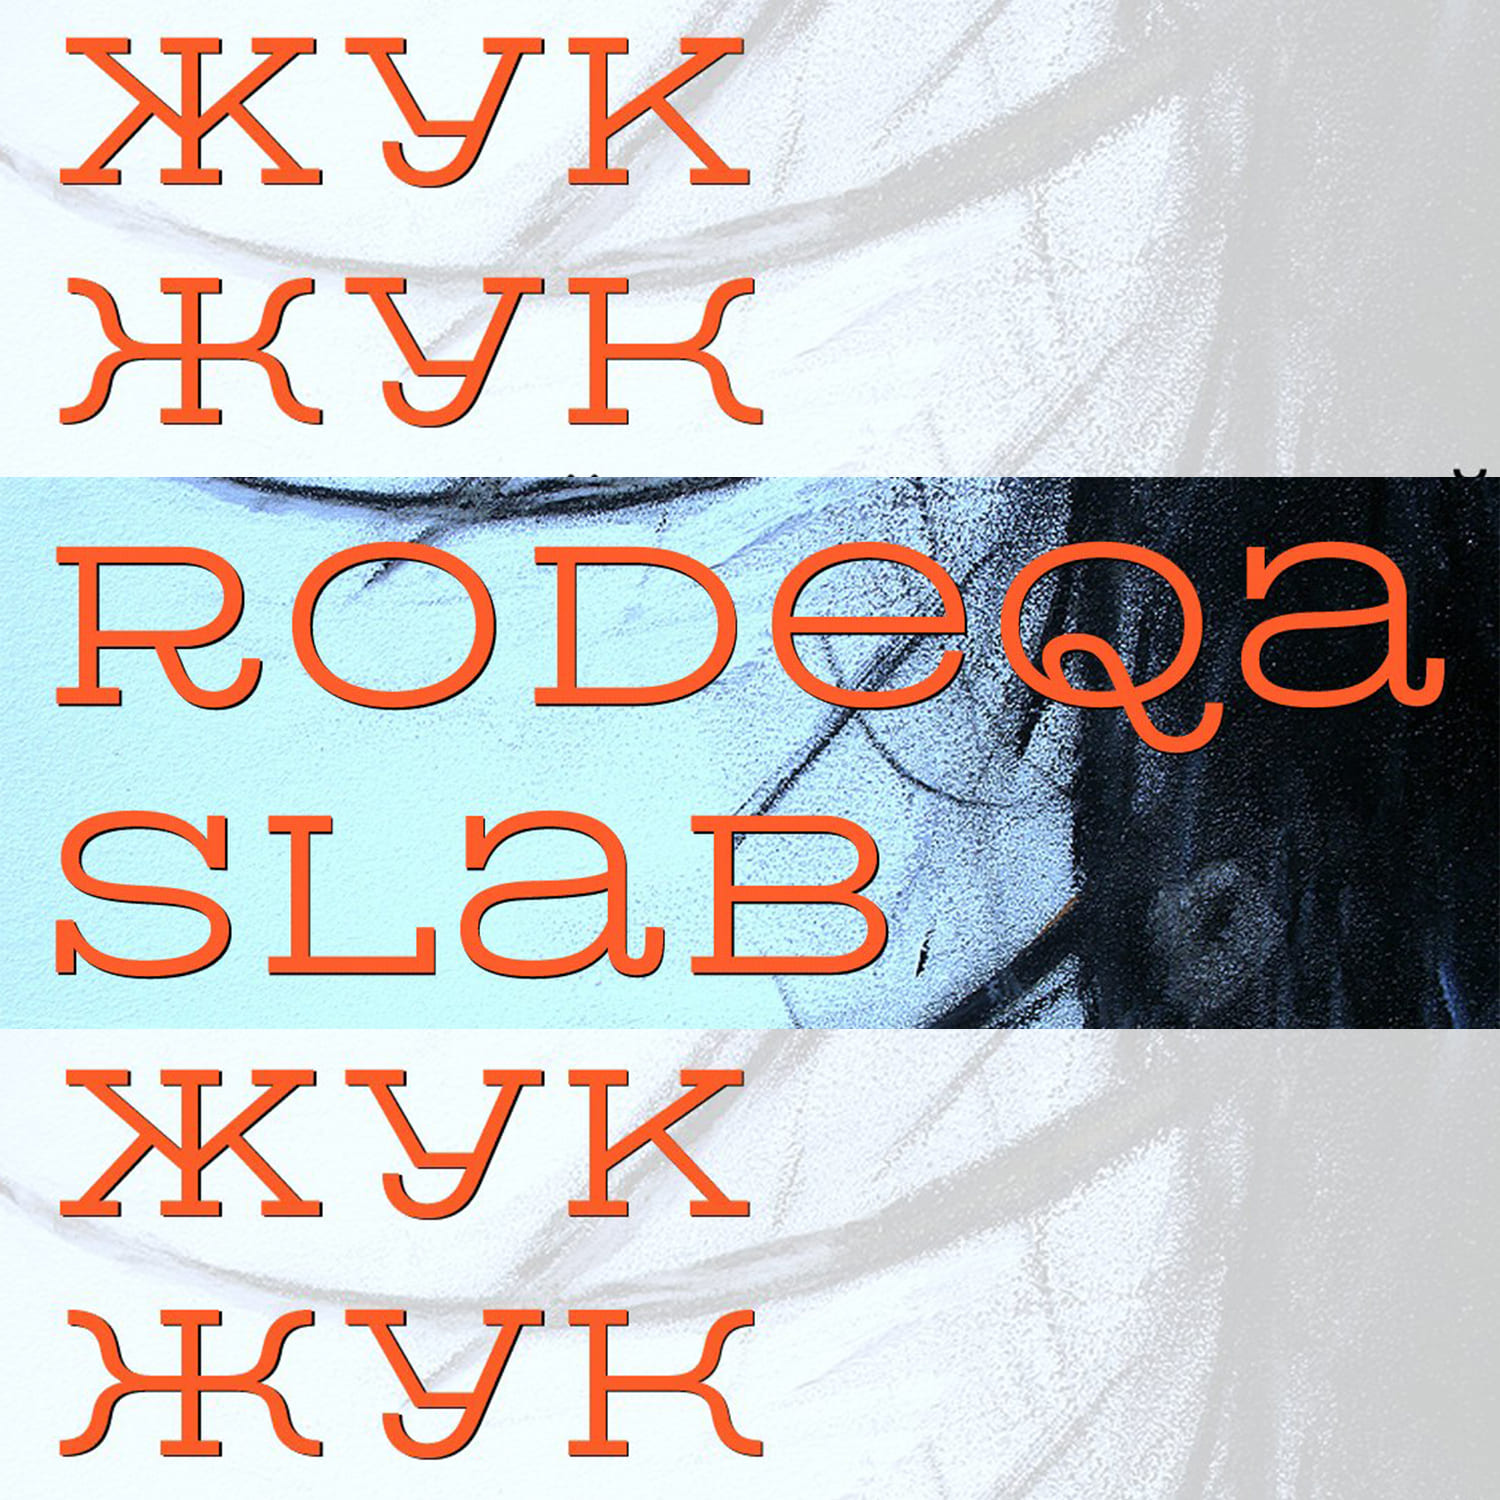 Rodeqa Slab 4F Regular cover image.